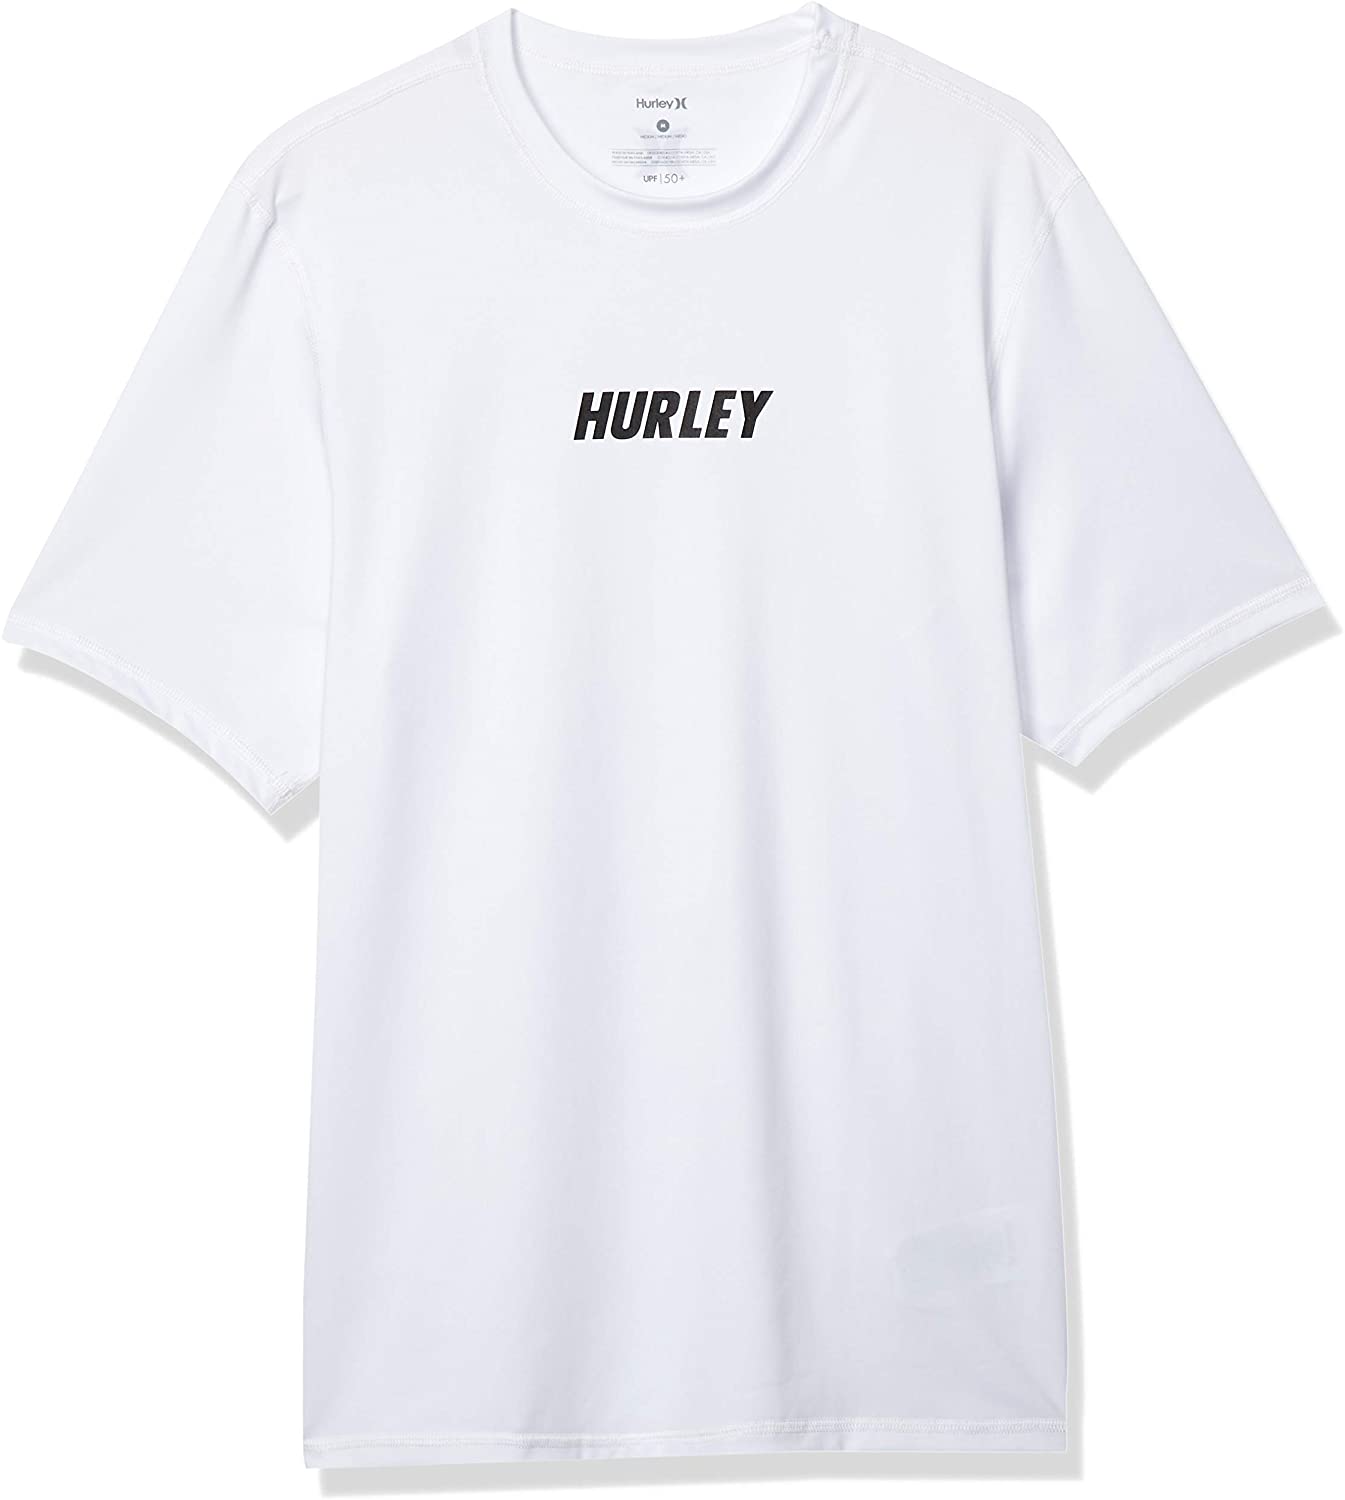 Hurley Mens Standard Fastlane Short Sleeve Active Sun Shirt Rashguard SPF 